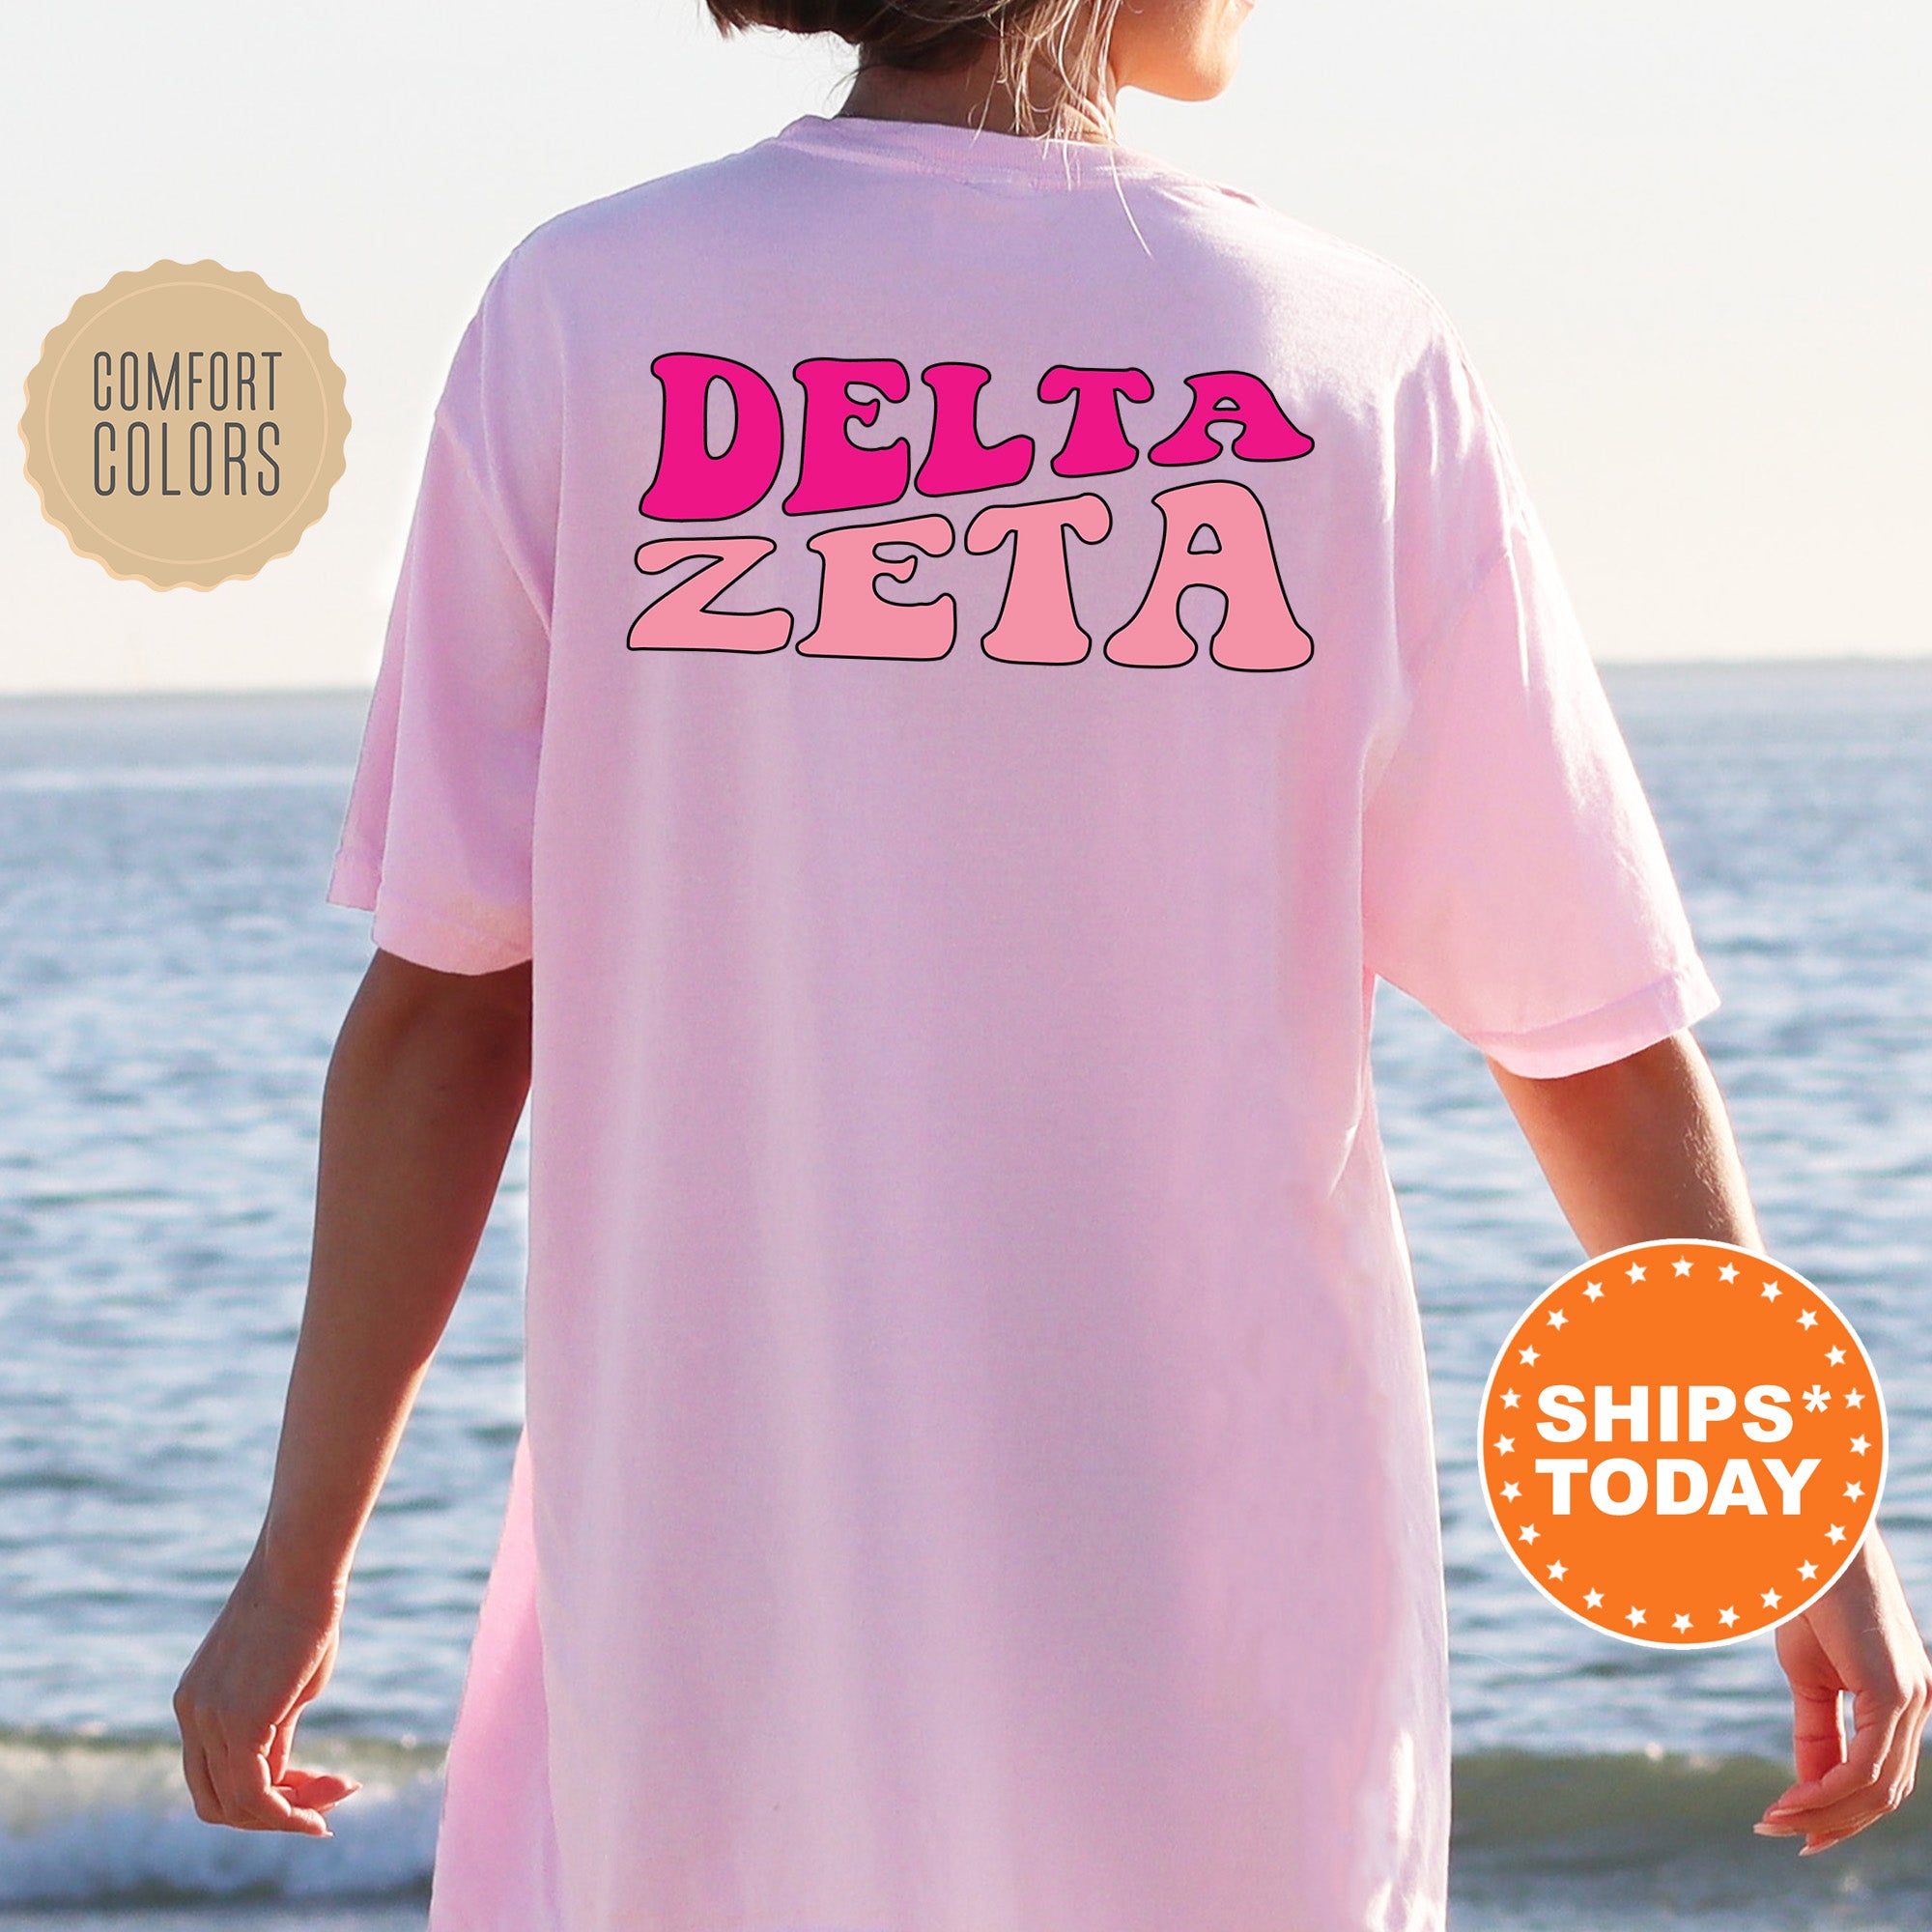 a woman wearing a pink shirt that says delta zeta